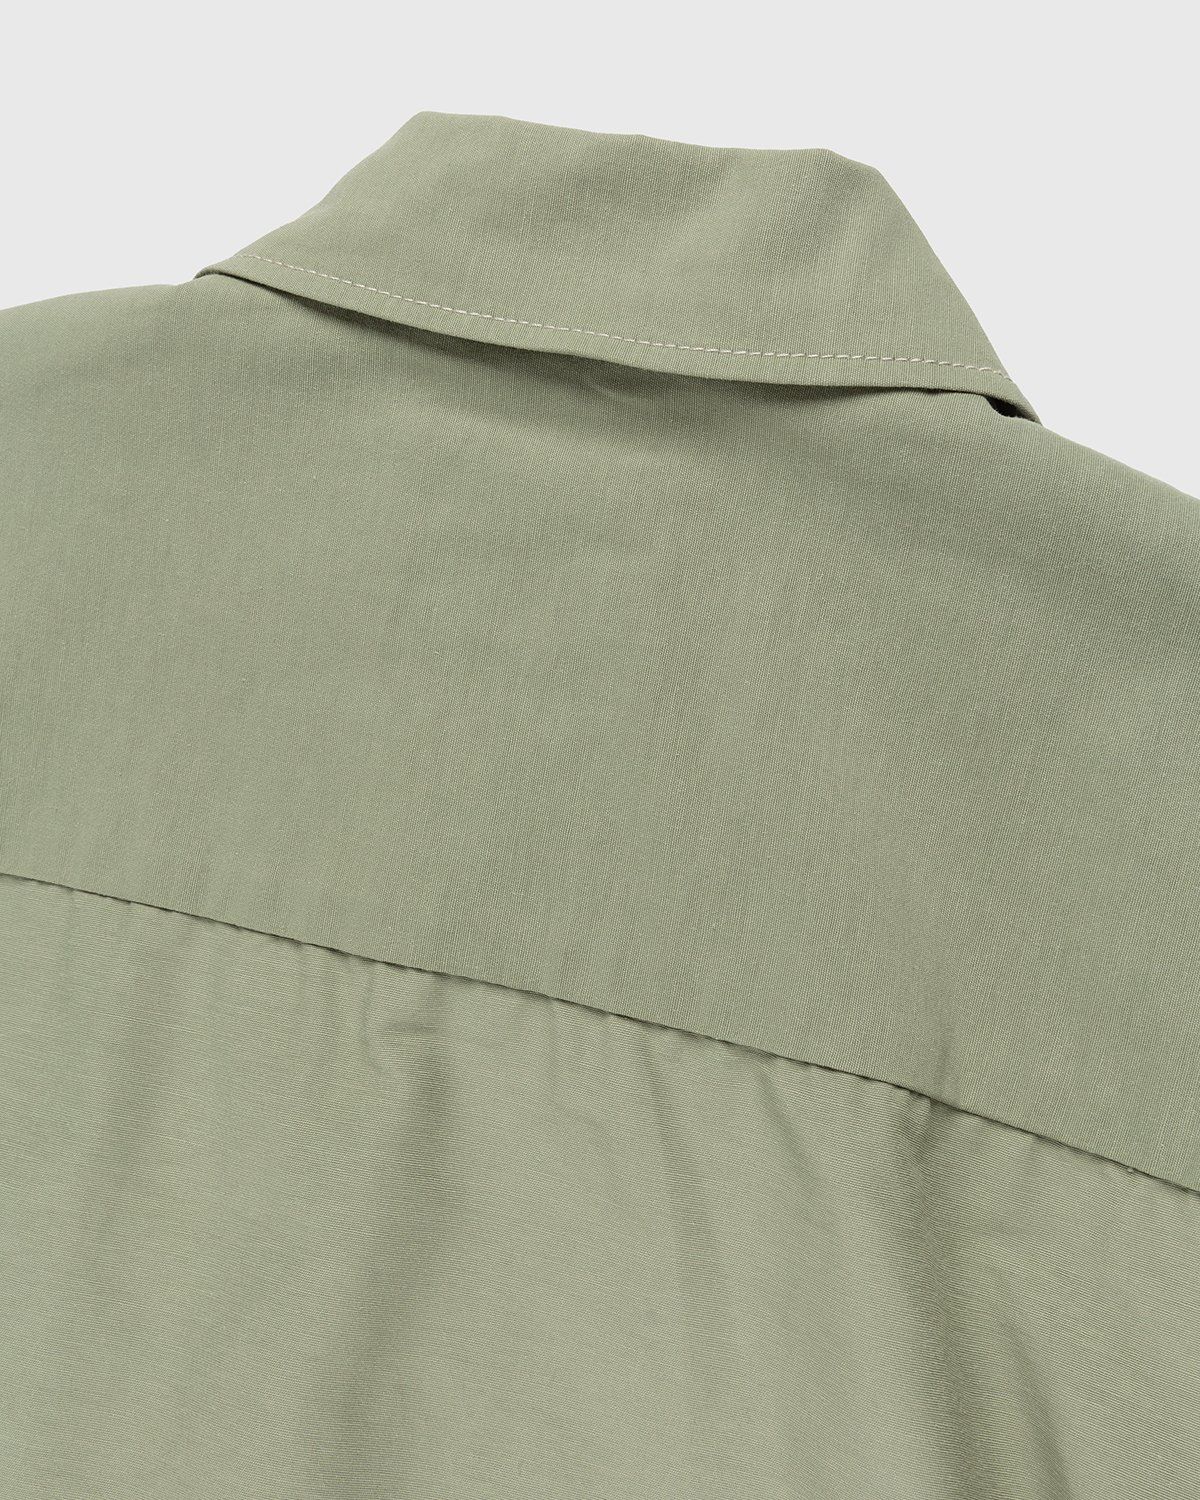 Snow Peak – Light Mountain Cloth Jacket Sage - Outerwear - Green - Image 3